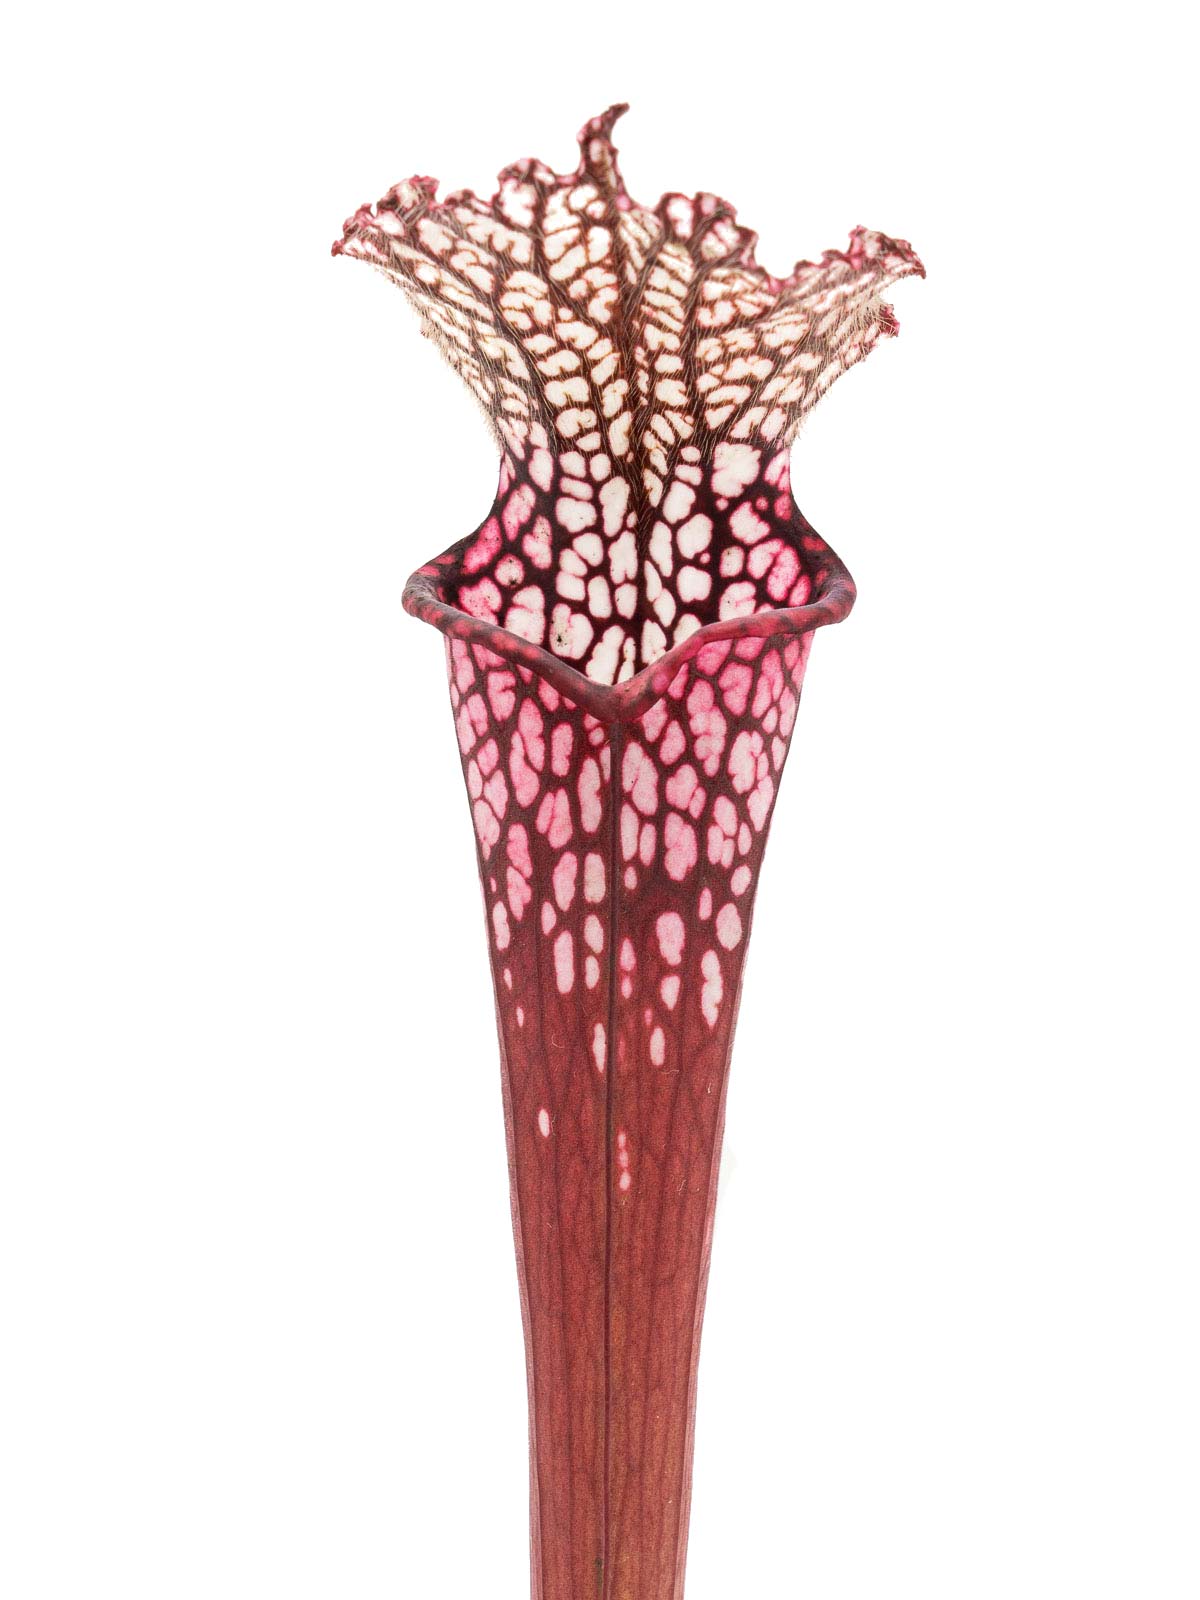 Sarracenia leucophylla - MK L49A, red & pink form, Perdido, Baldwin County, Alabama